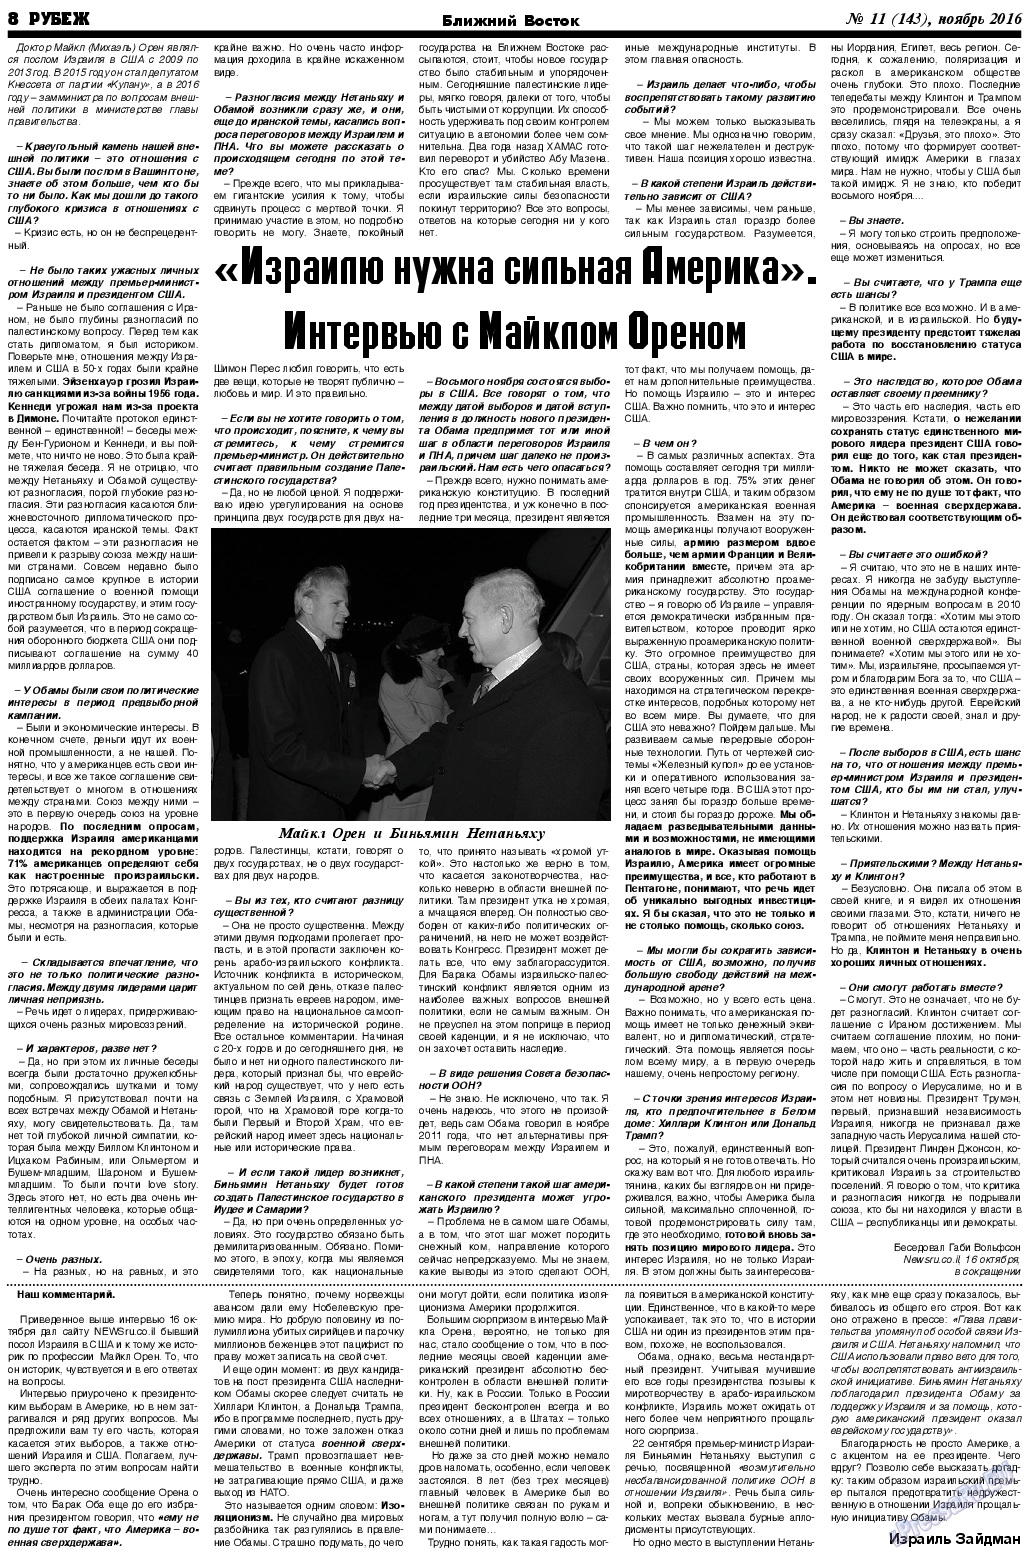 Рубеж, газета. 2016 №11 стр.8